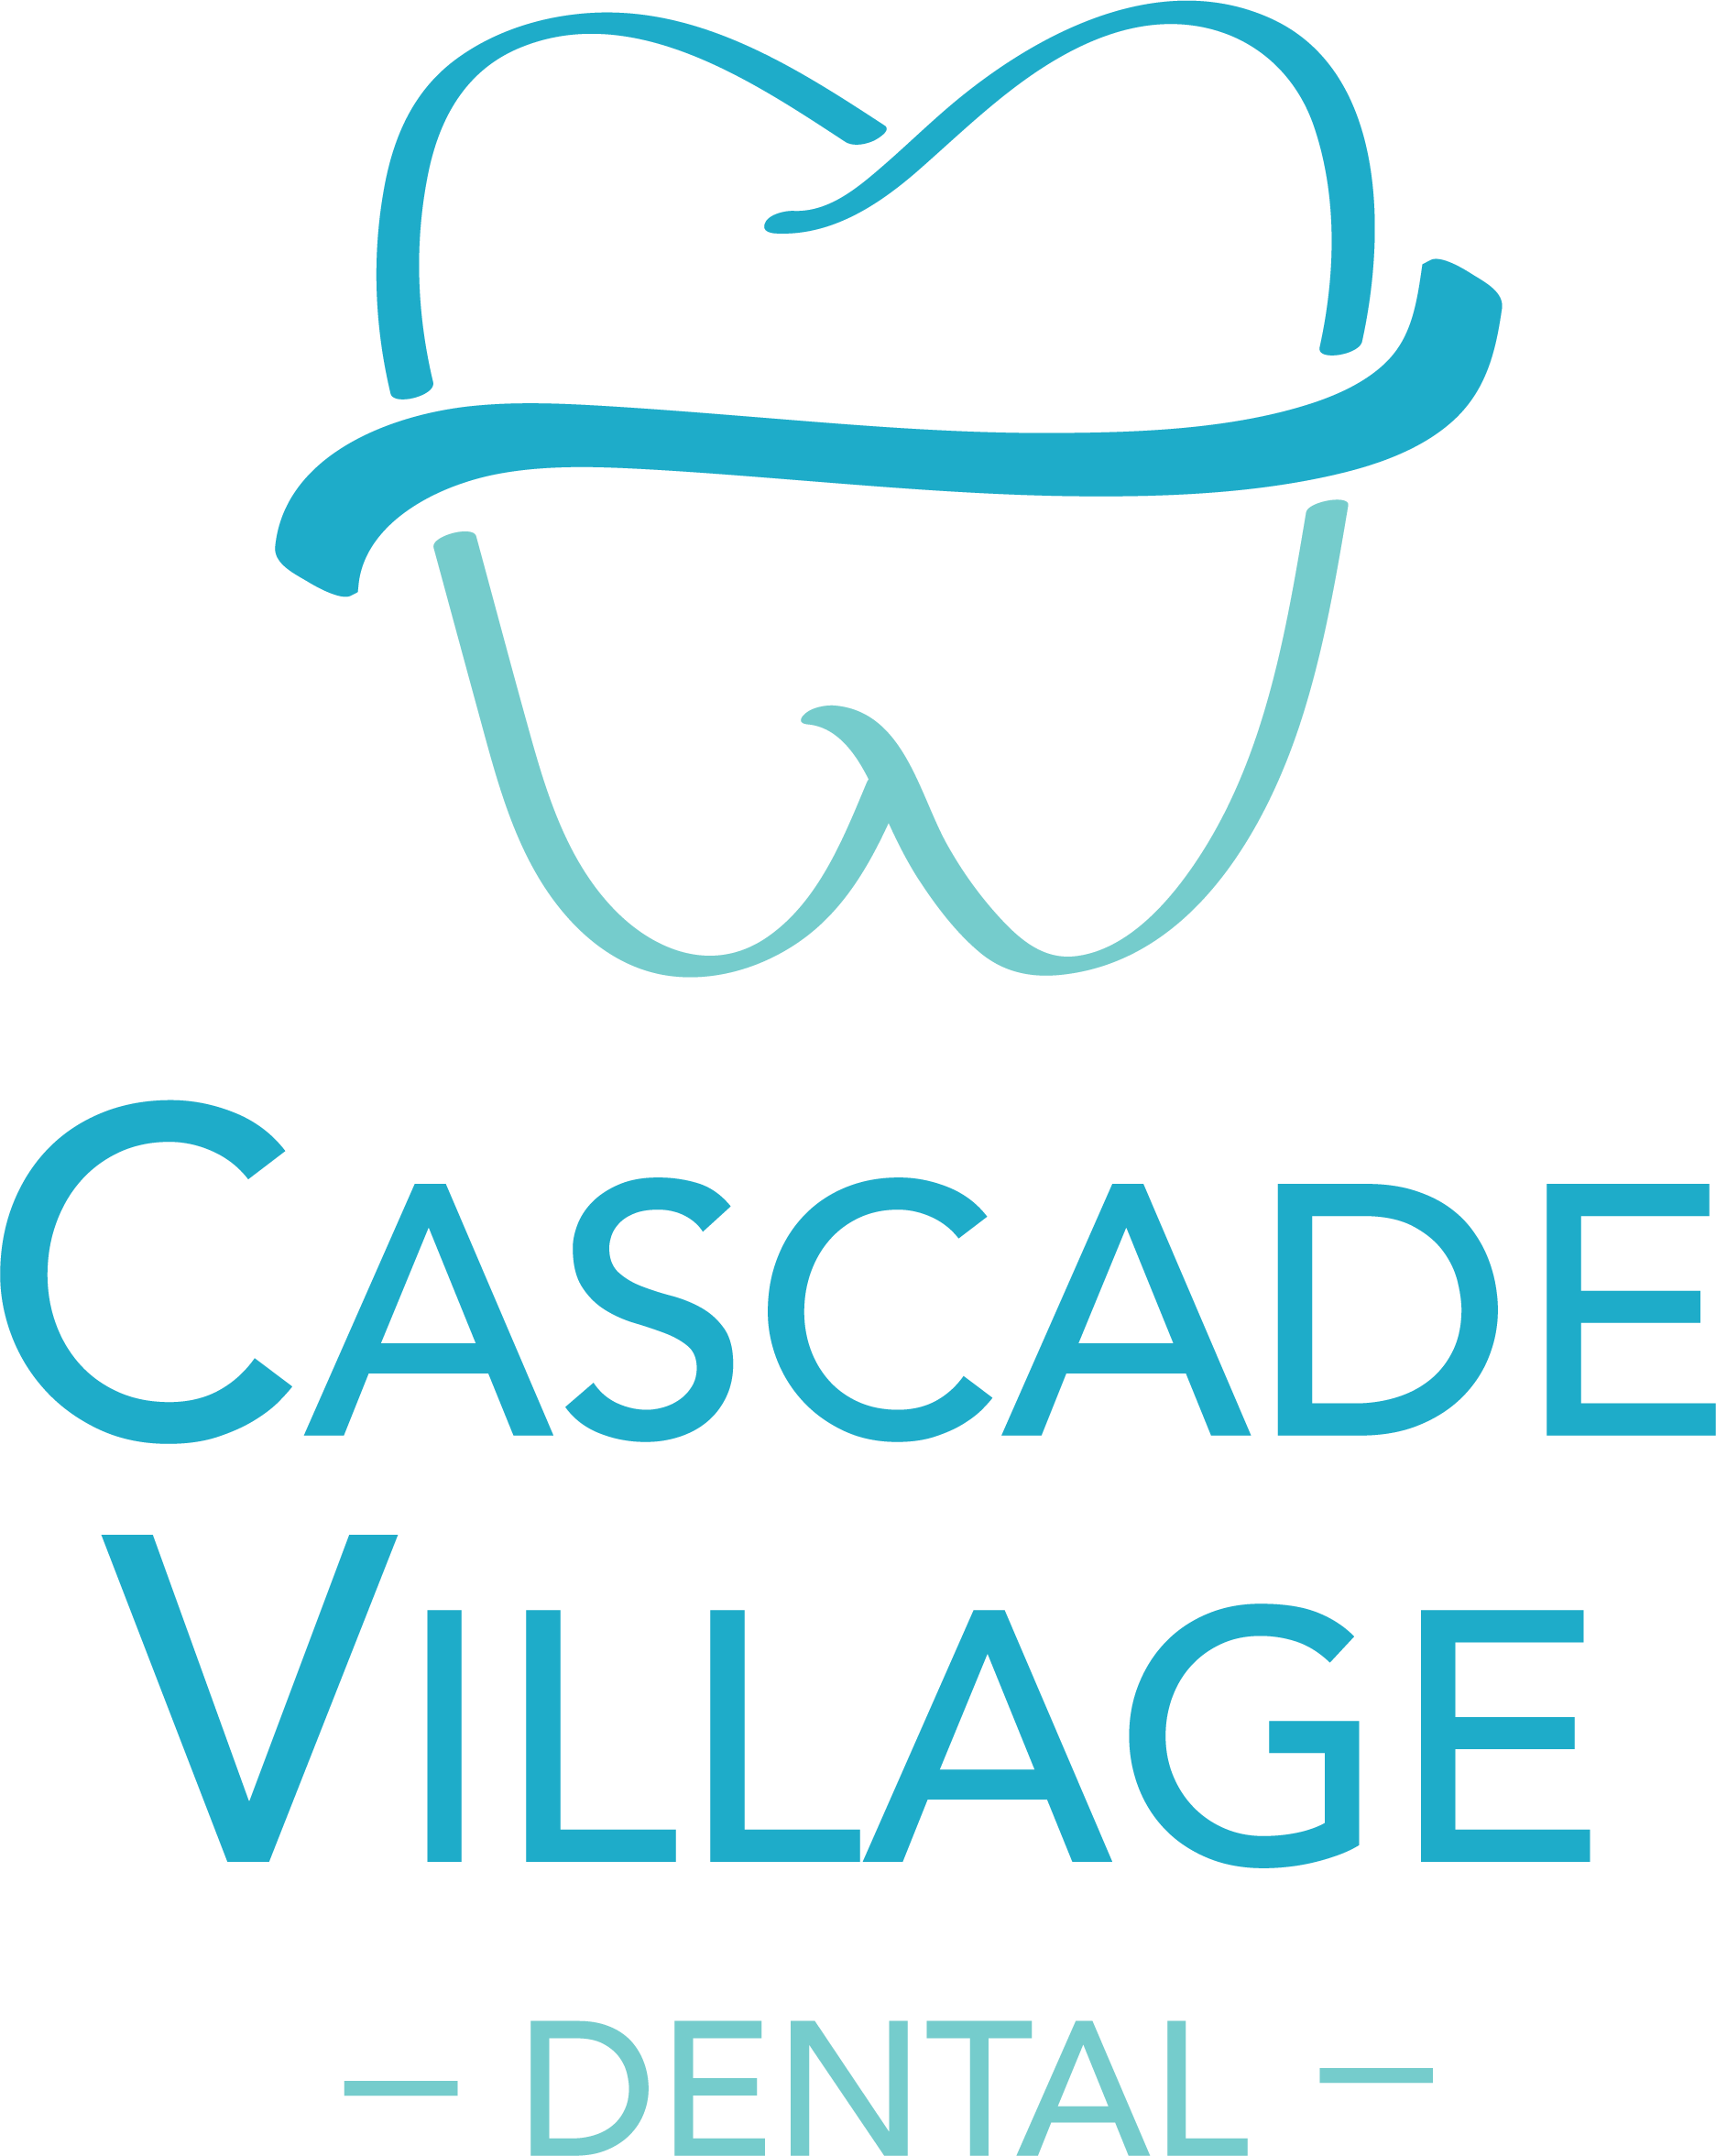 Cascade Village Dental_Primary Logo